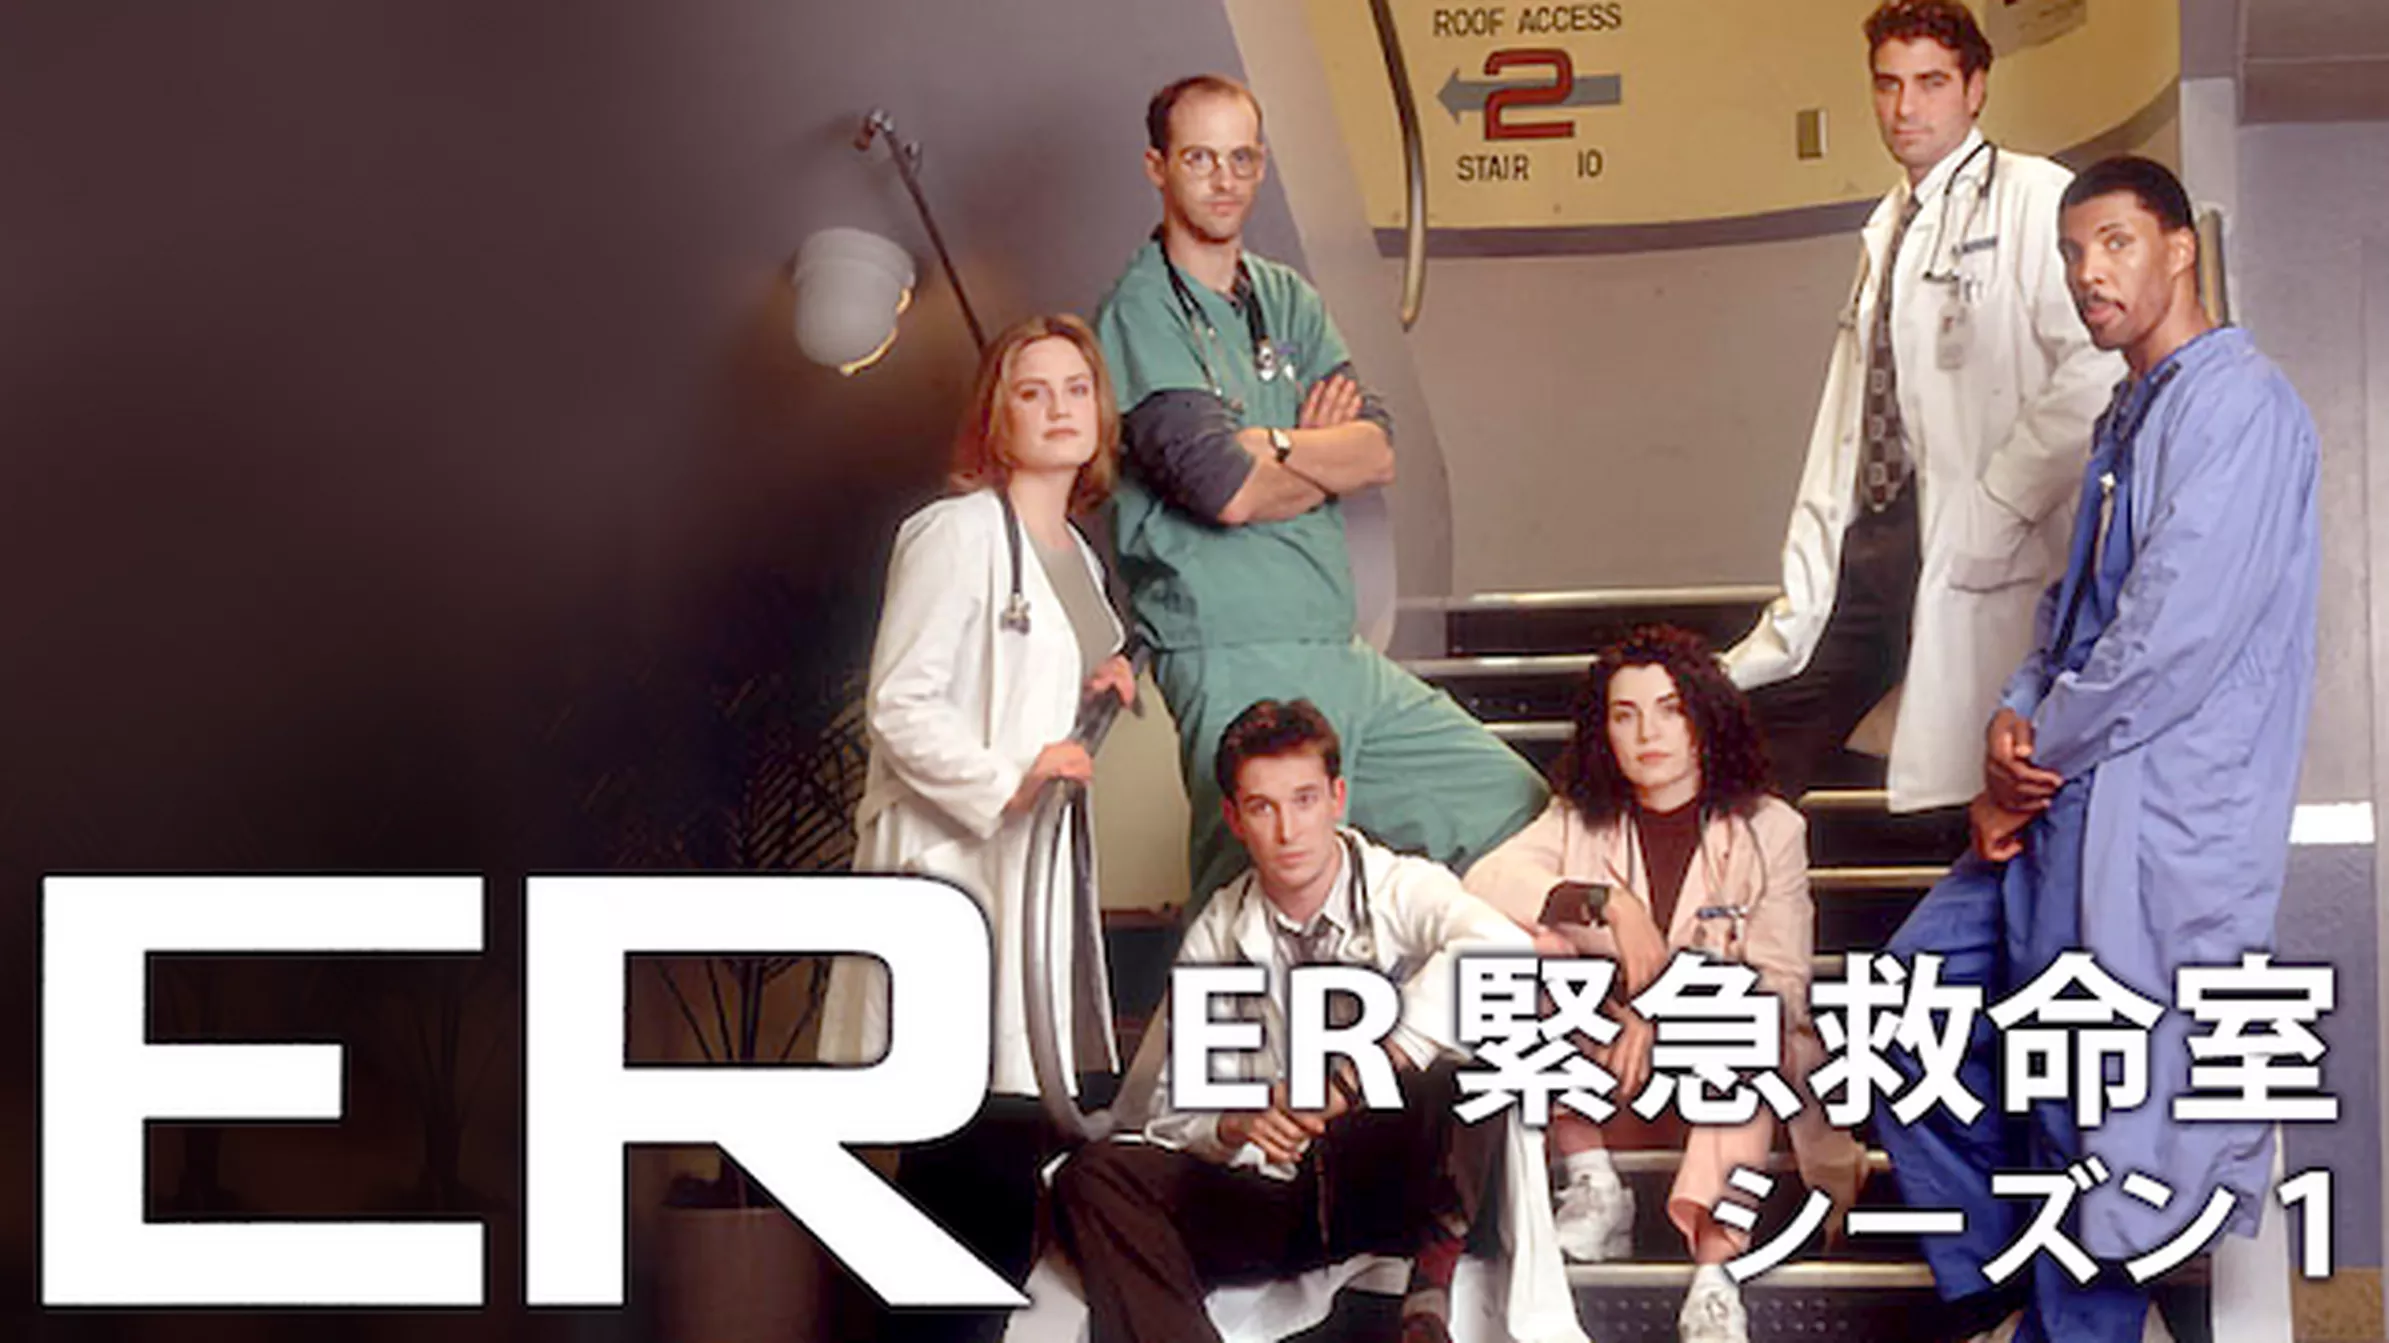 ER 緊急救命室 シーズン14(海外ドラマ / 2007) - 動画配信 | U-NEXT 31 